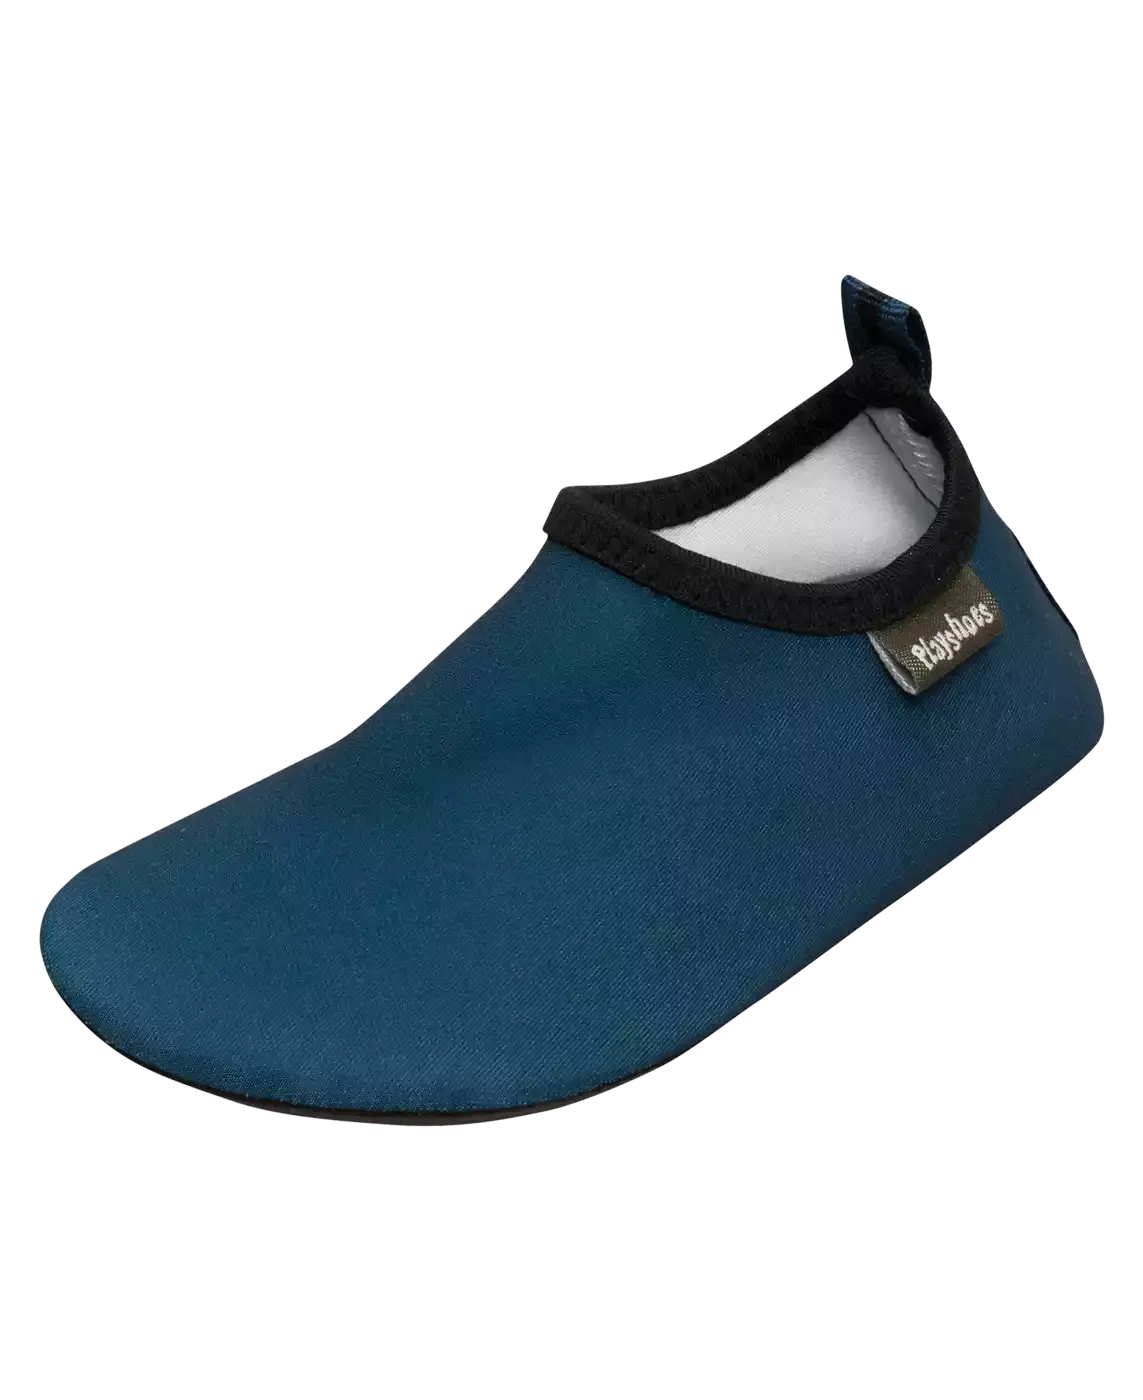 Badeschuh Playshoes Blau M2024573074402 3